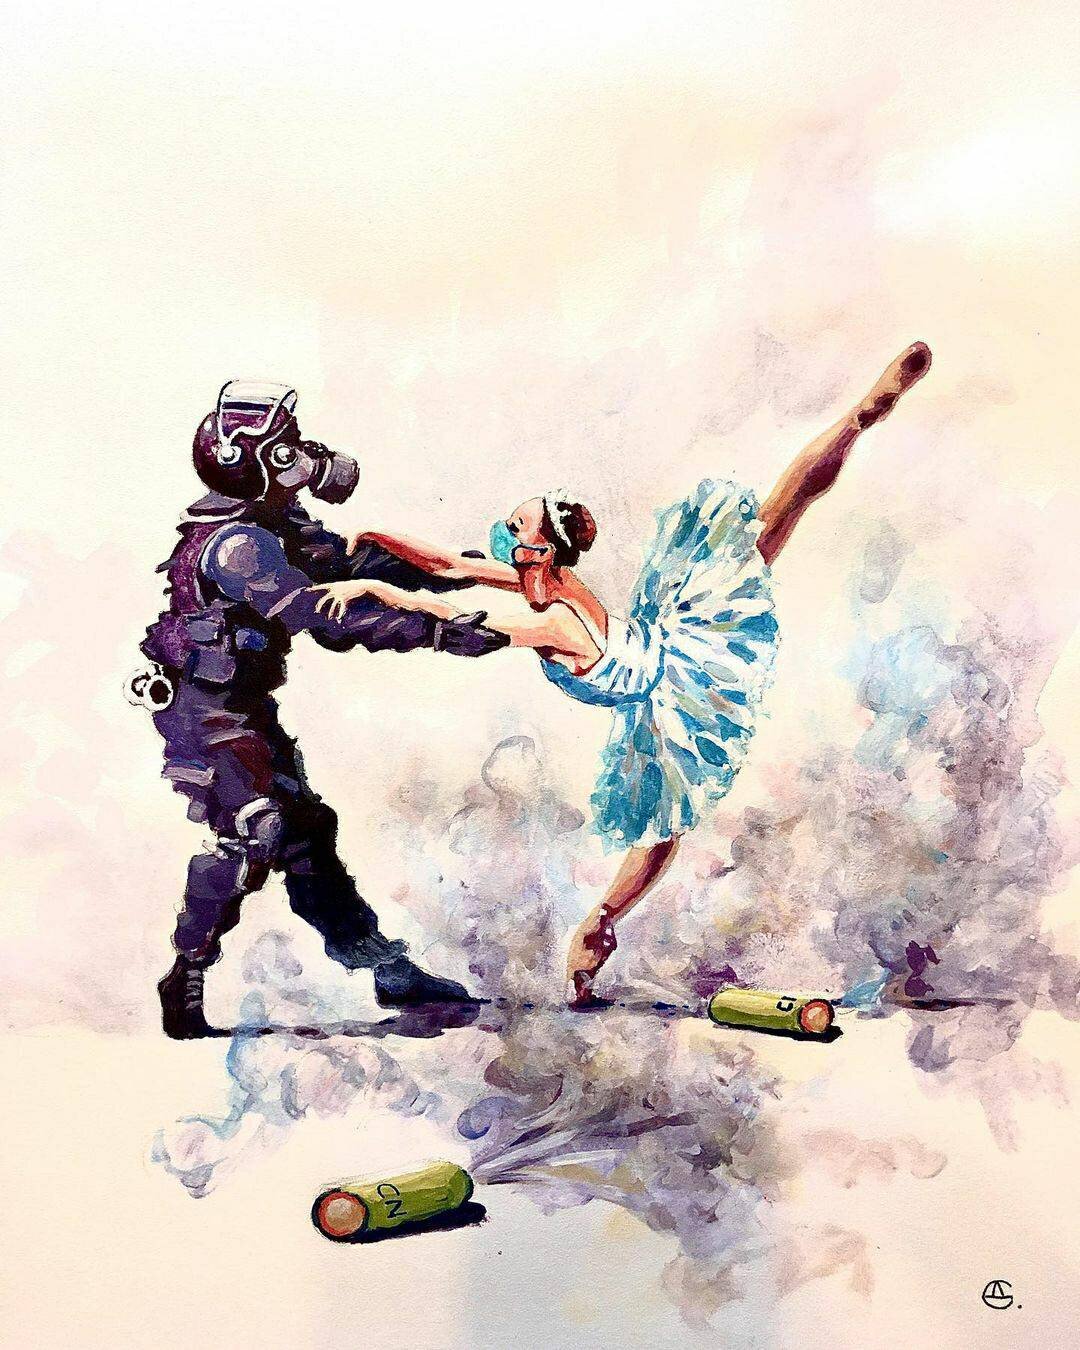 One year of this dance.  Art by @denissudarikov1
.
.
.
.
.
.
.
.
.
#dance #ballet #covid #covidart #mask #anniversary #art #statement #newart #russia #russianart #artoftheday #hobby #amateurart #sketch